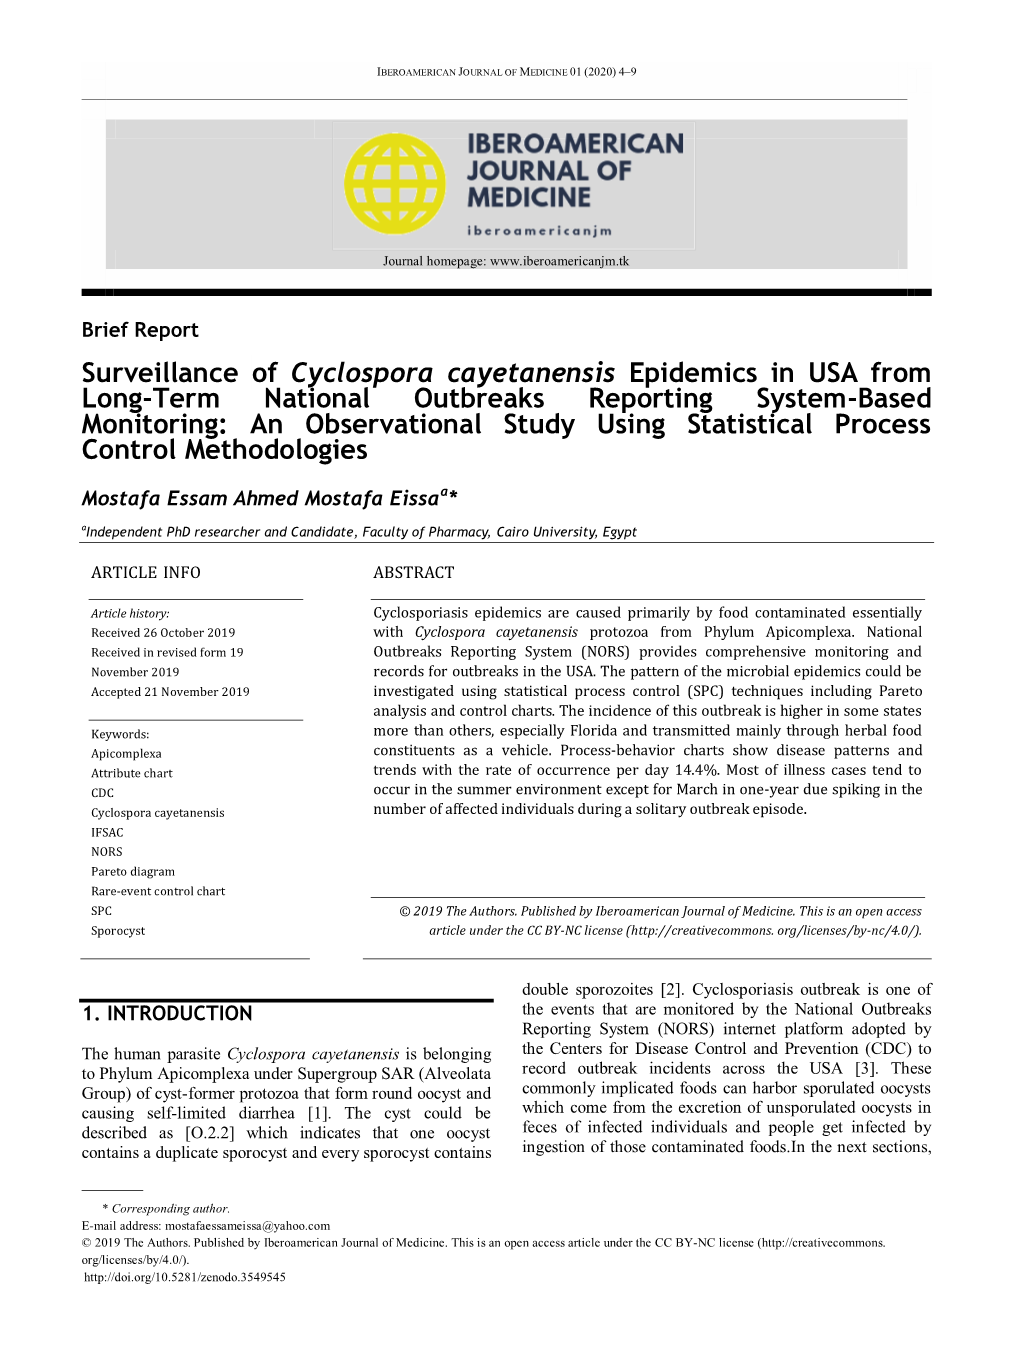 Surveillance of Cyclospora Cayetanensis Epidemics